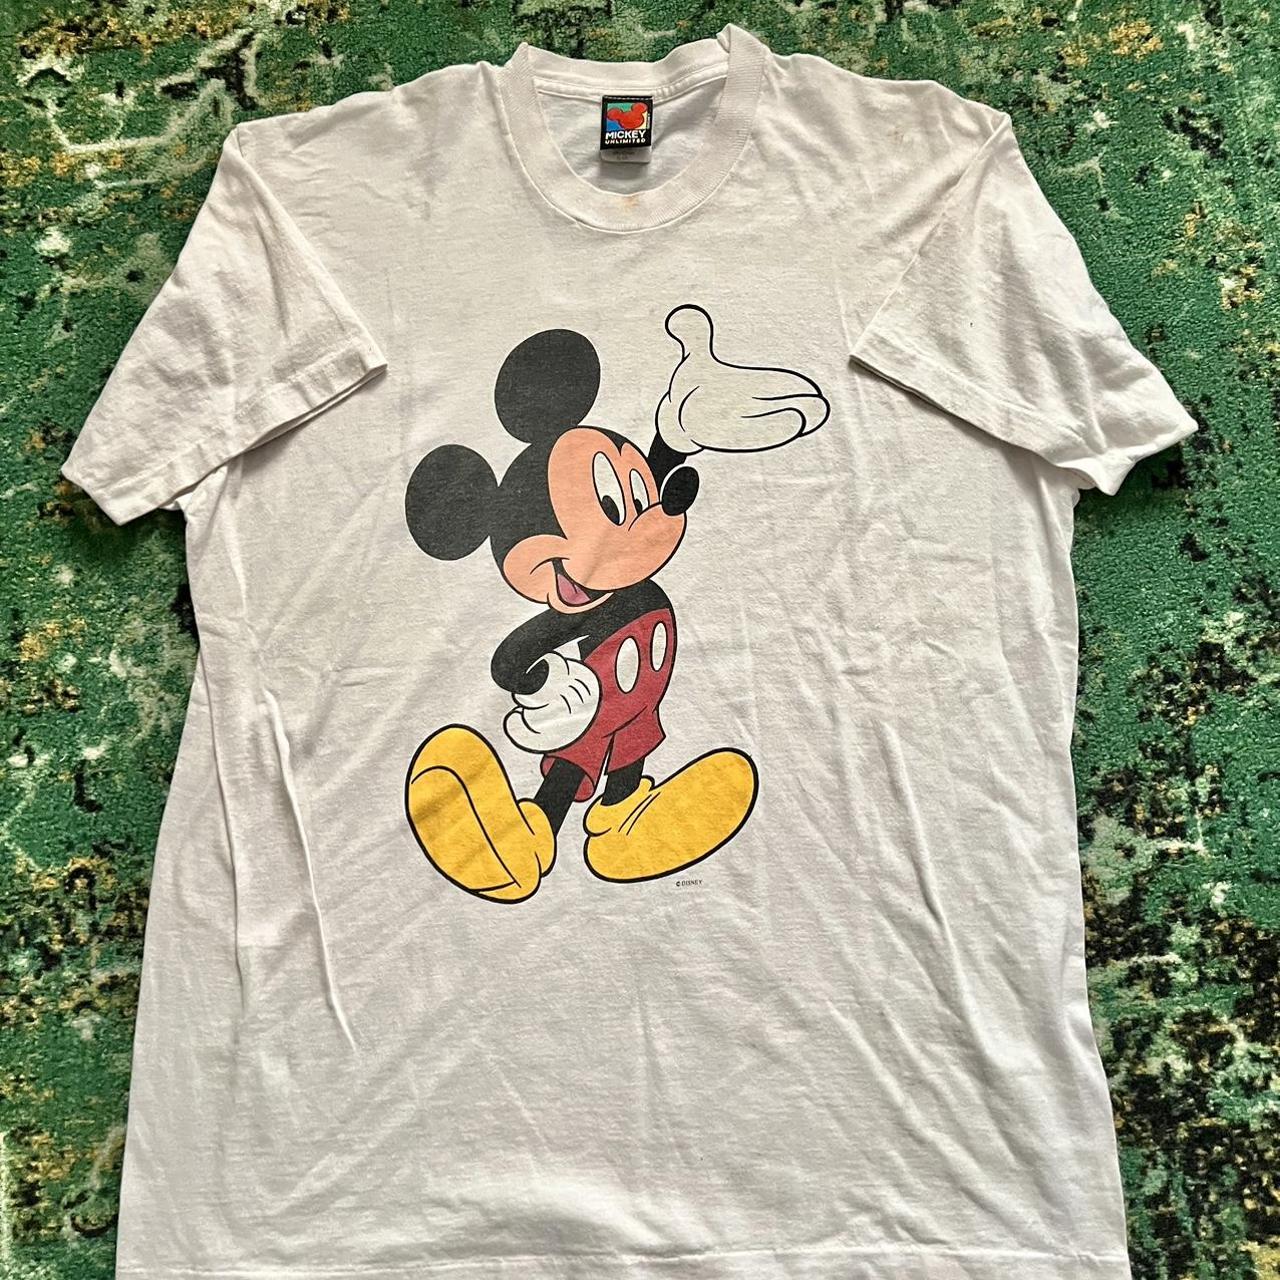 🔥🔥🔥Vintage 1990s Disney Mickey Mouse shirt … Big... - Depop